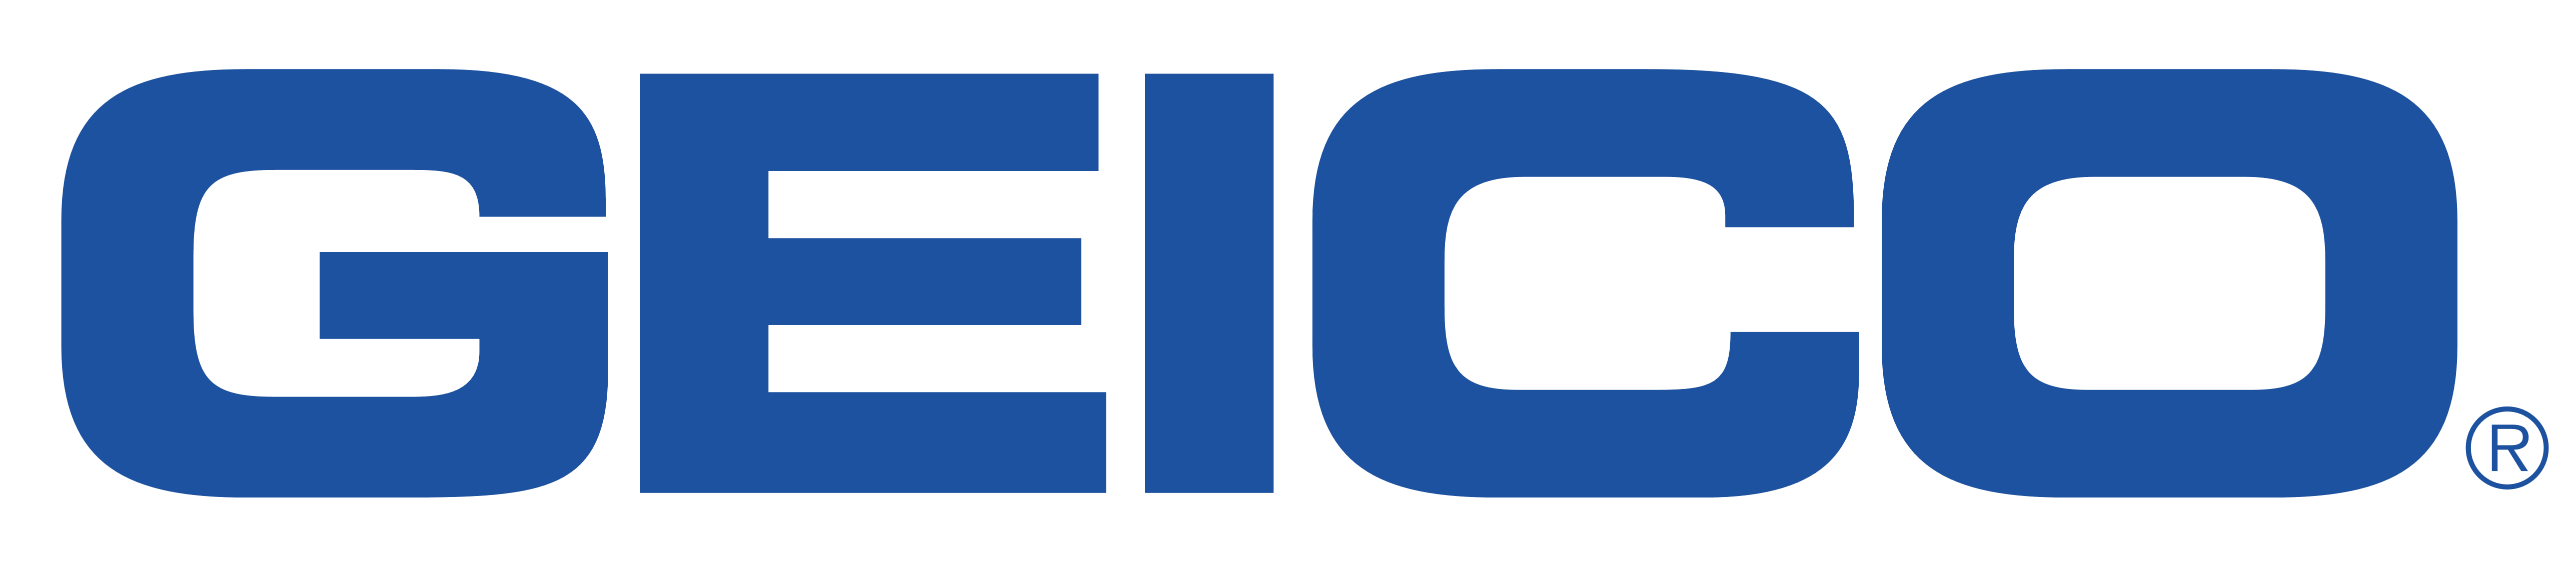 GEICO Small Logo - Geico – Logos Download